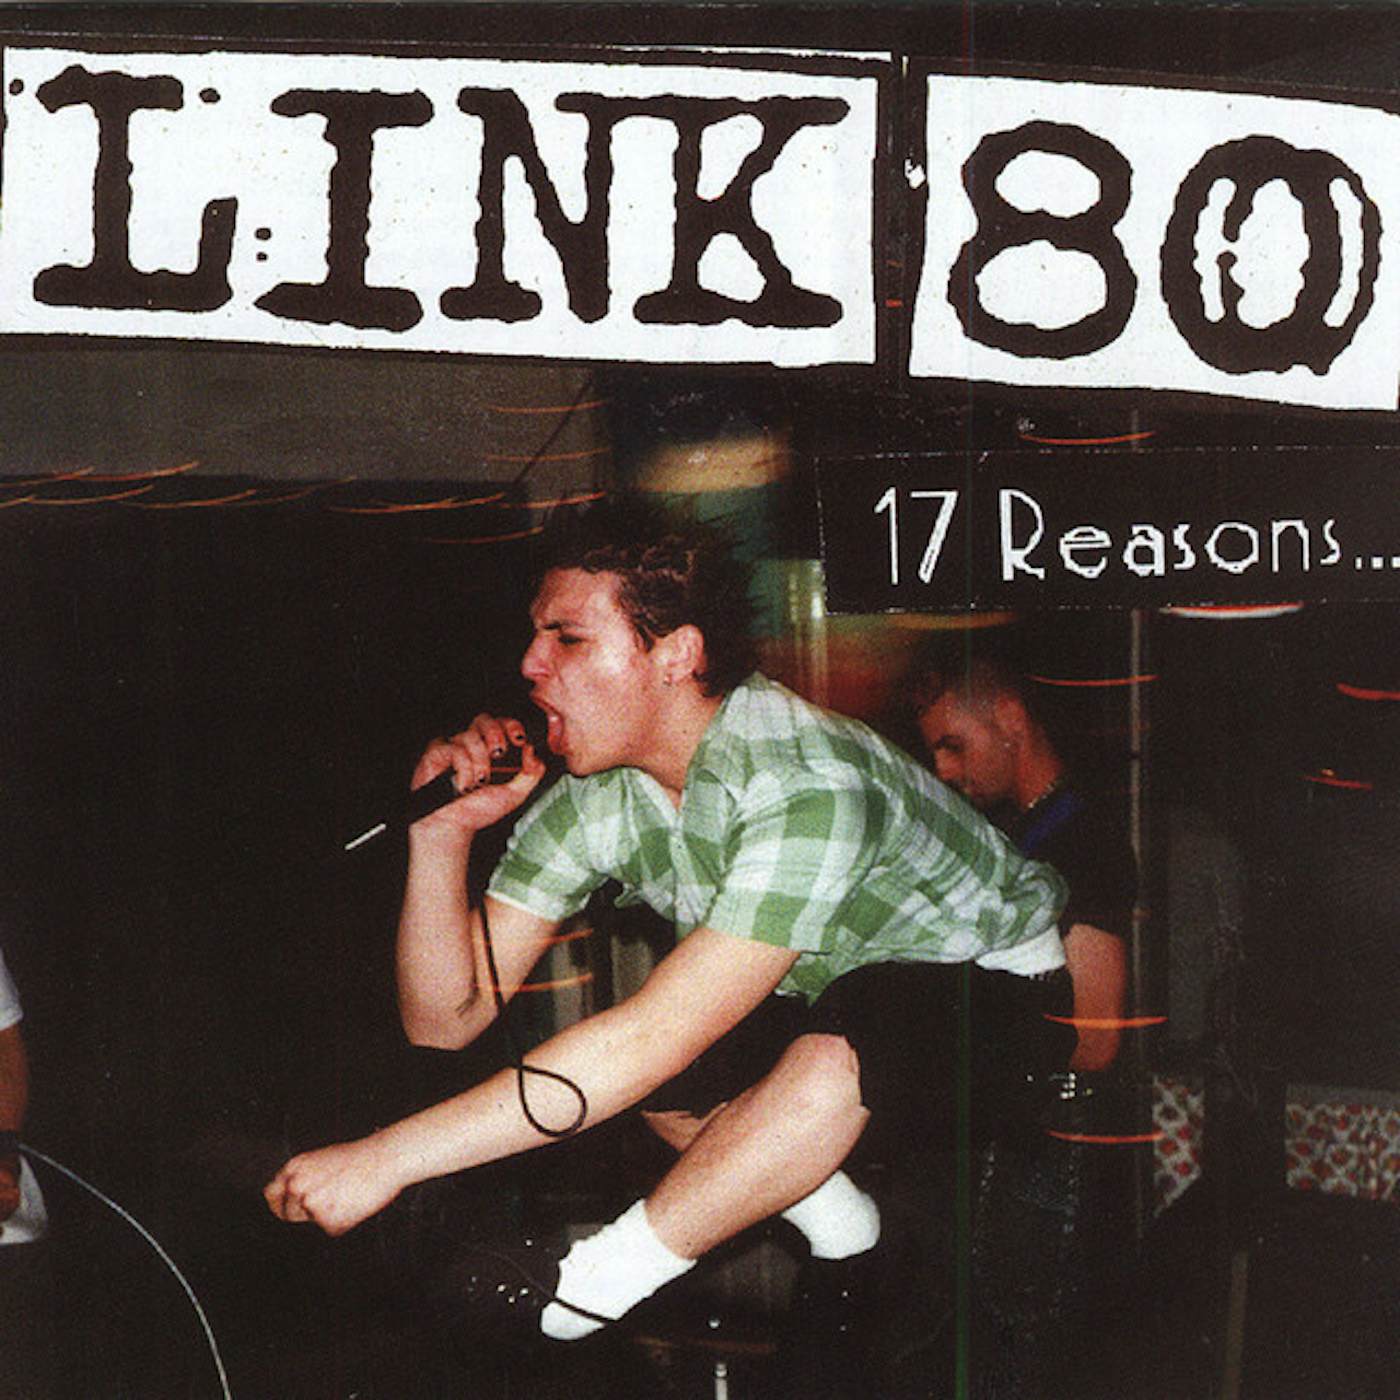 Link 80 17 Reasons Vinyl Record